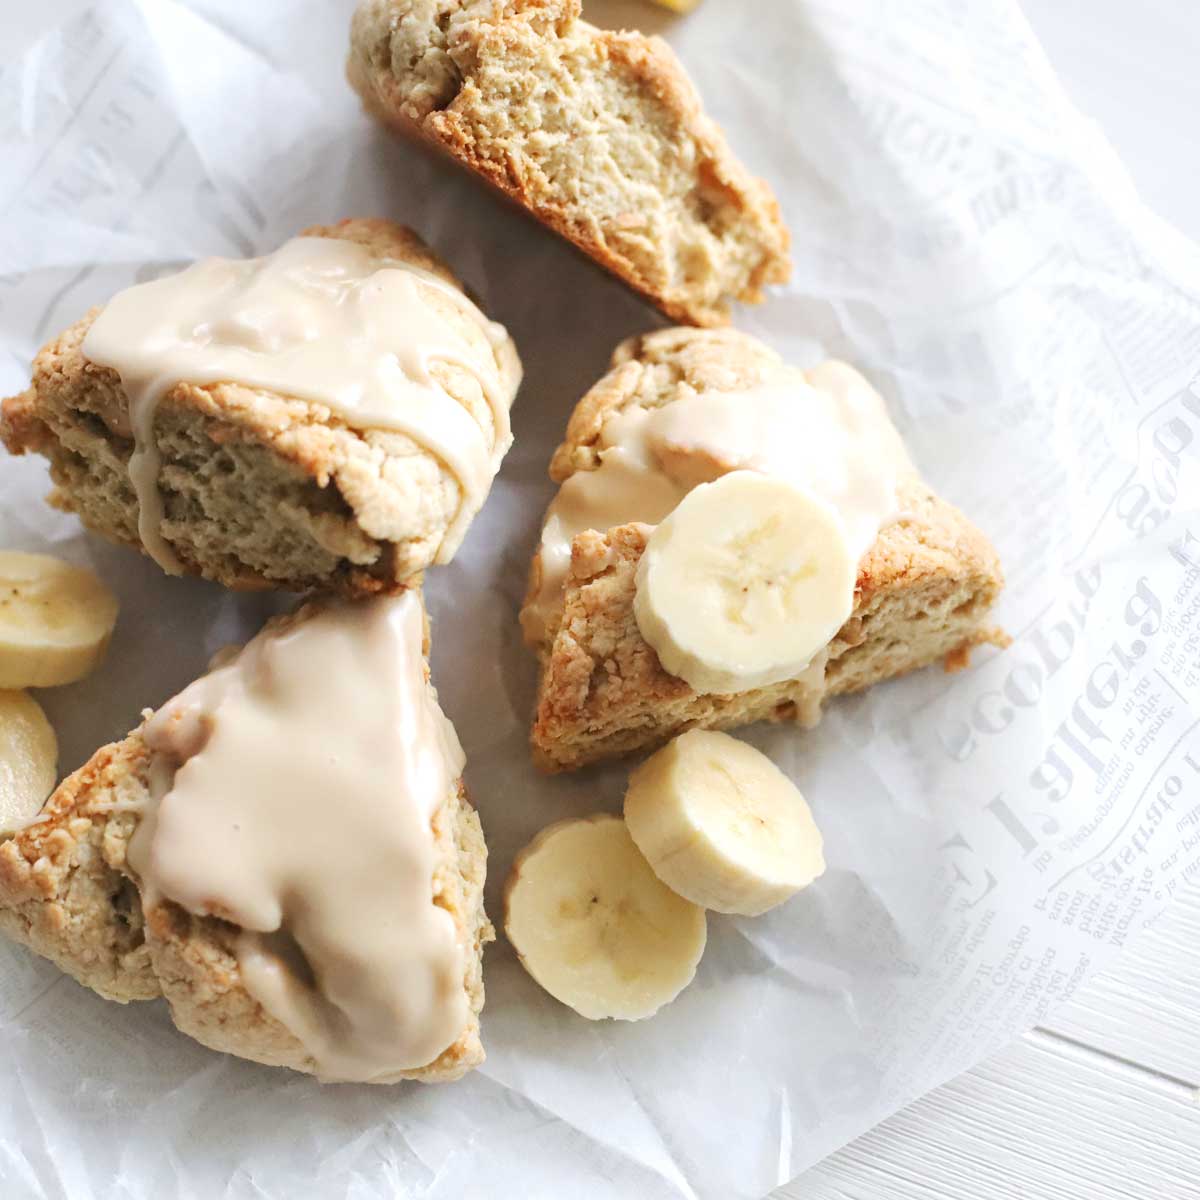 Homemade Banana Nut Scones with Maple Glaze (Healthy, Vegan Recipe) - Finger Sandwich